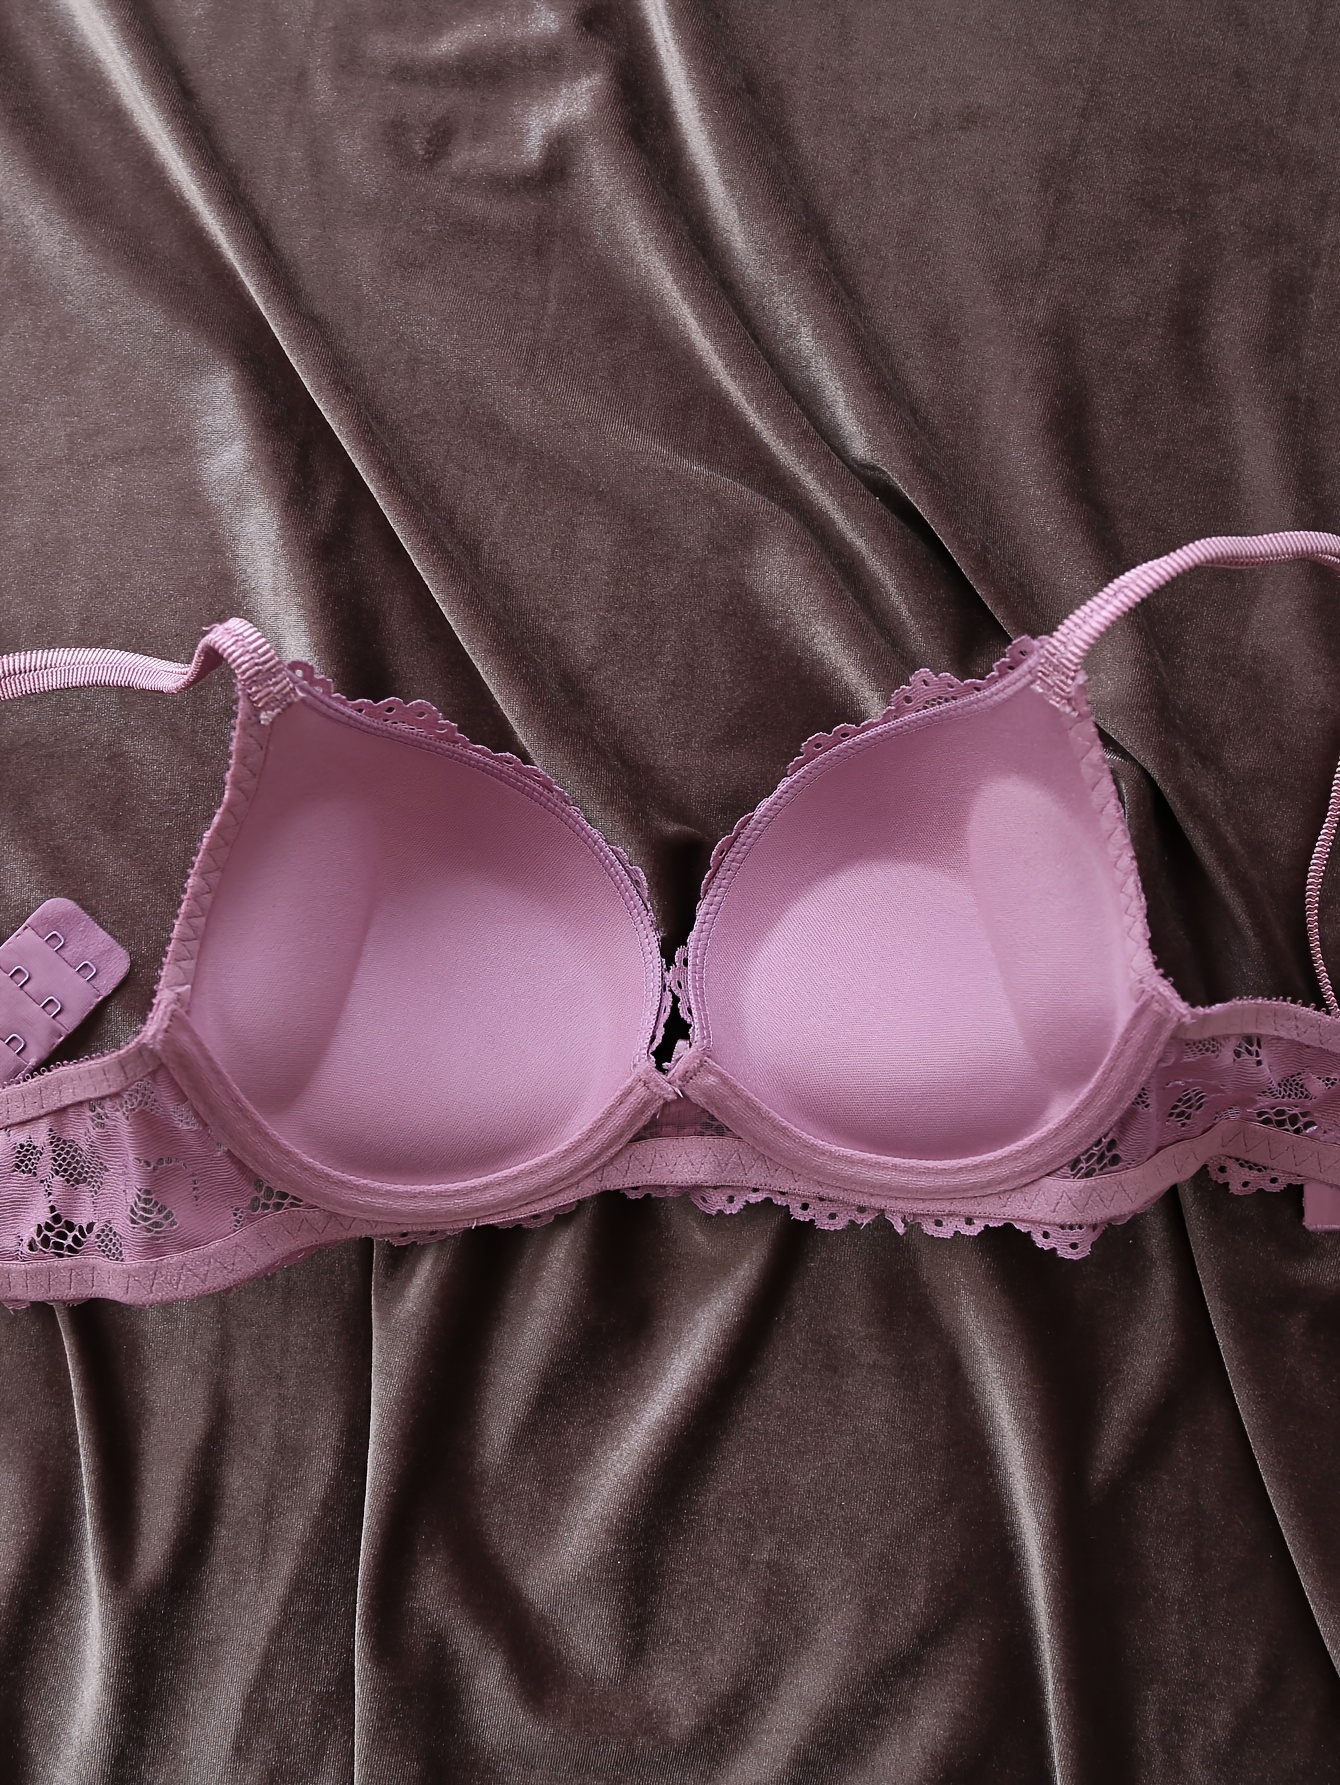 Victoria's Secret super push up bra in size 34A, Women's Fashion,  Undergarments & Loungewear on Carousell